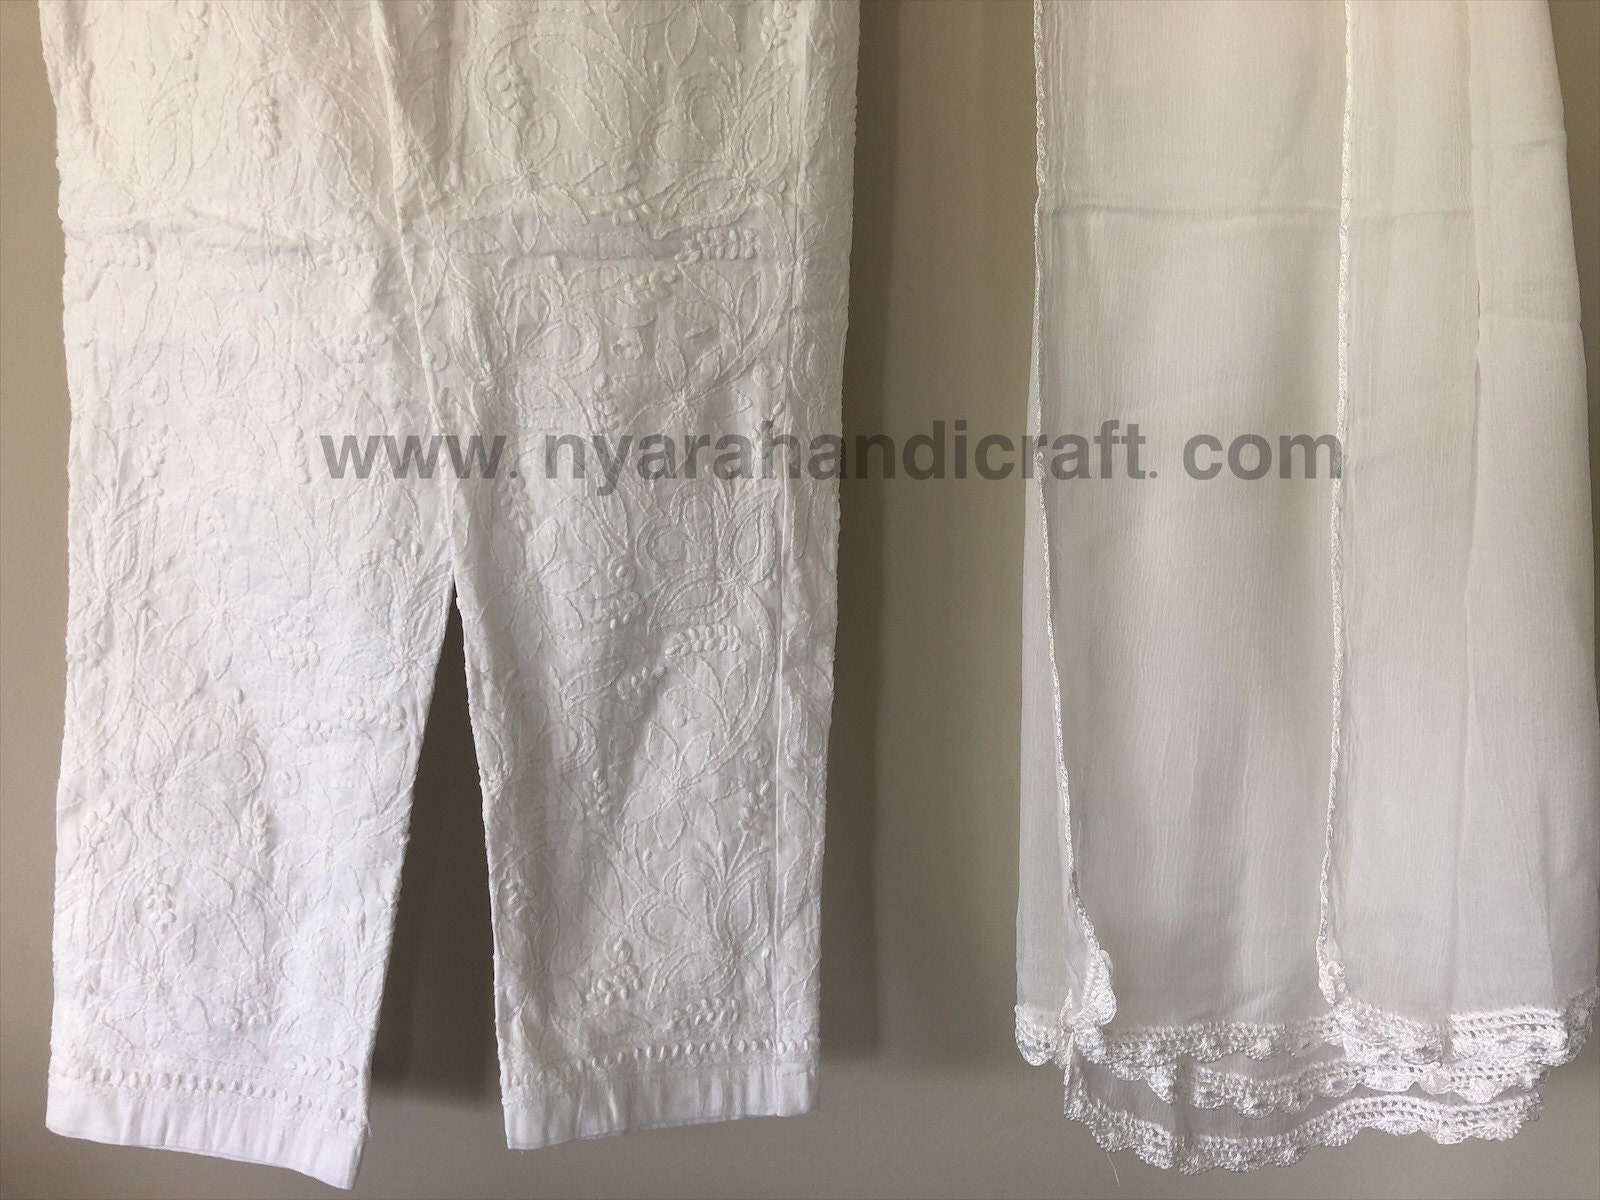 Buy White Pants for Women by Readiprint Fashions Online | Ajio.com